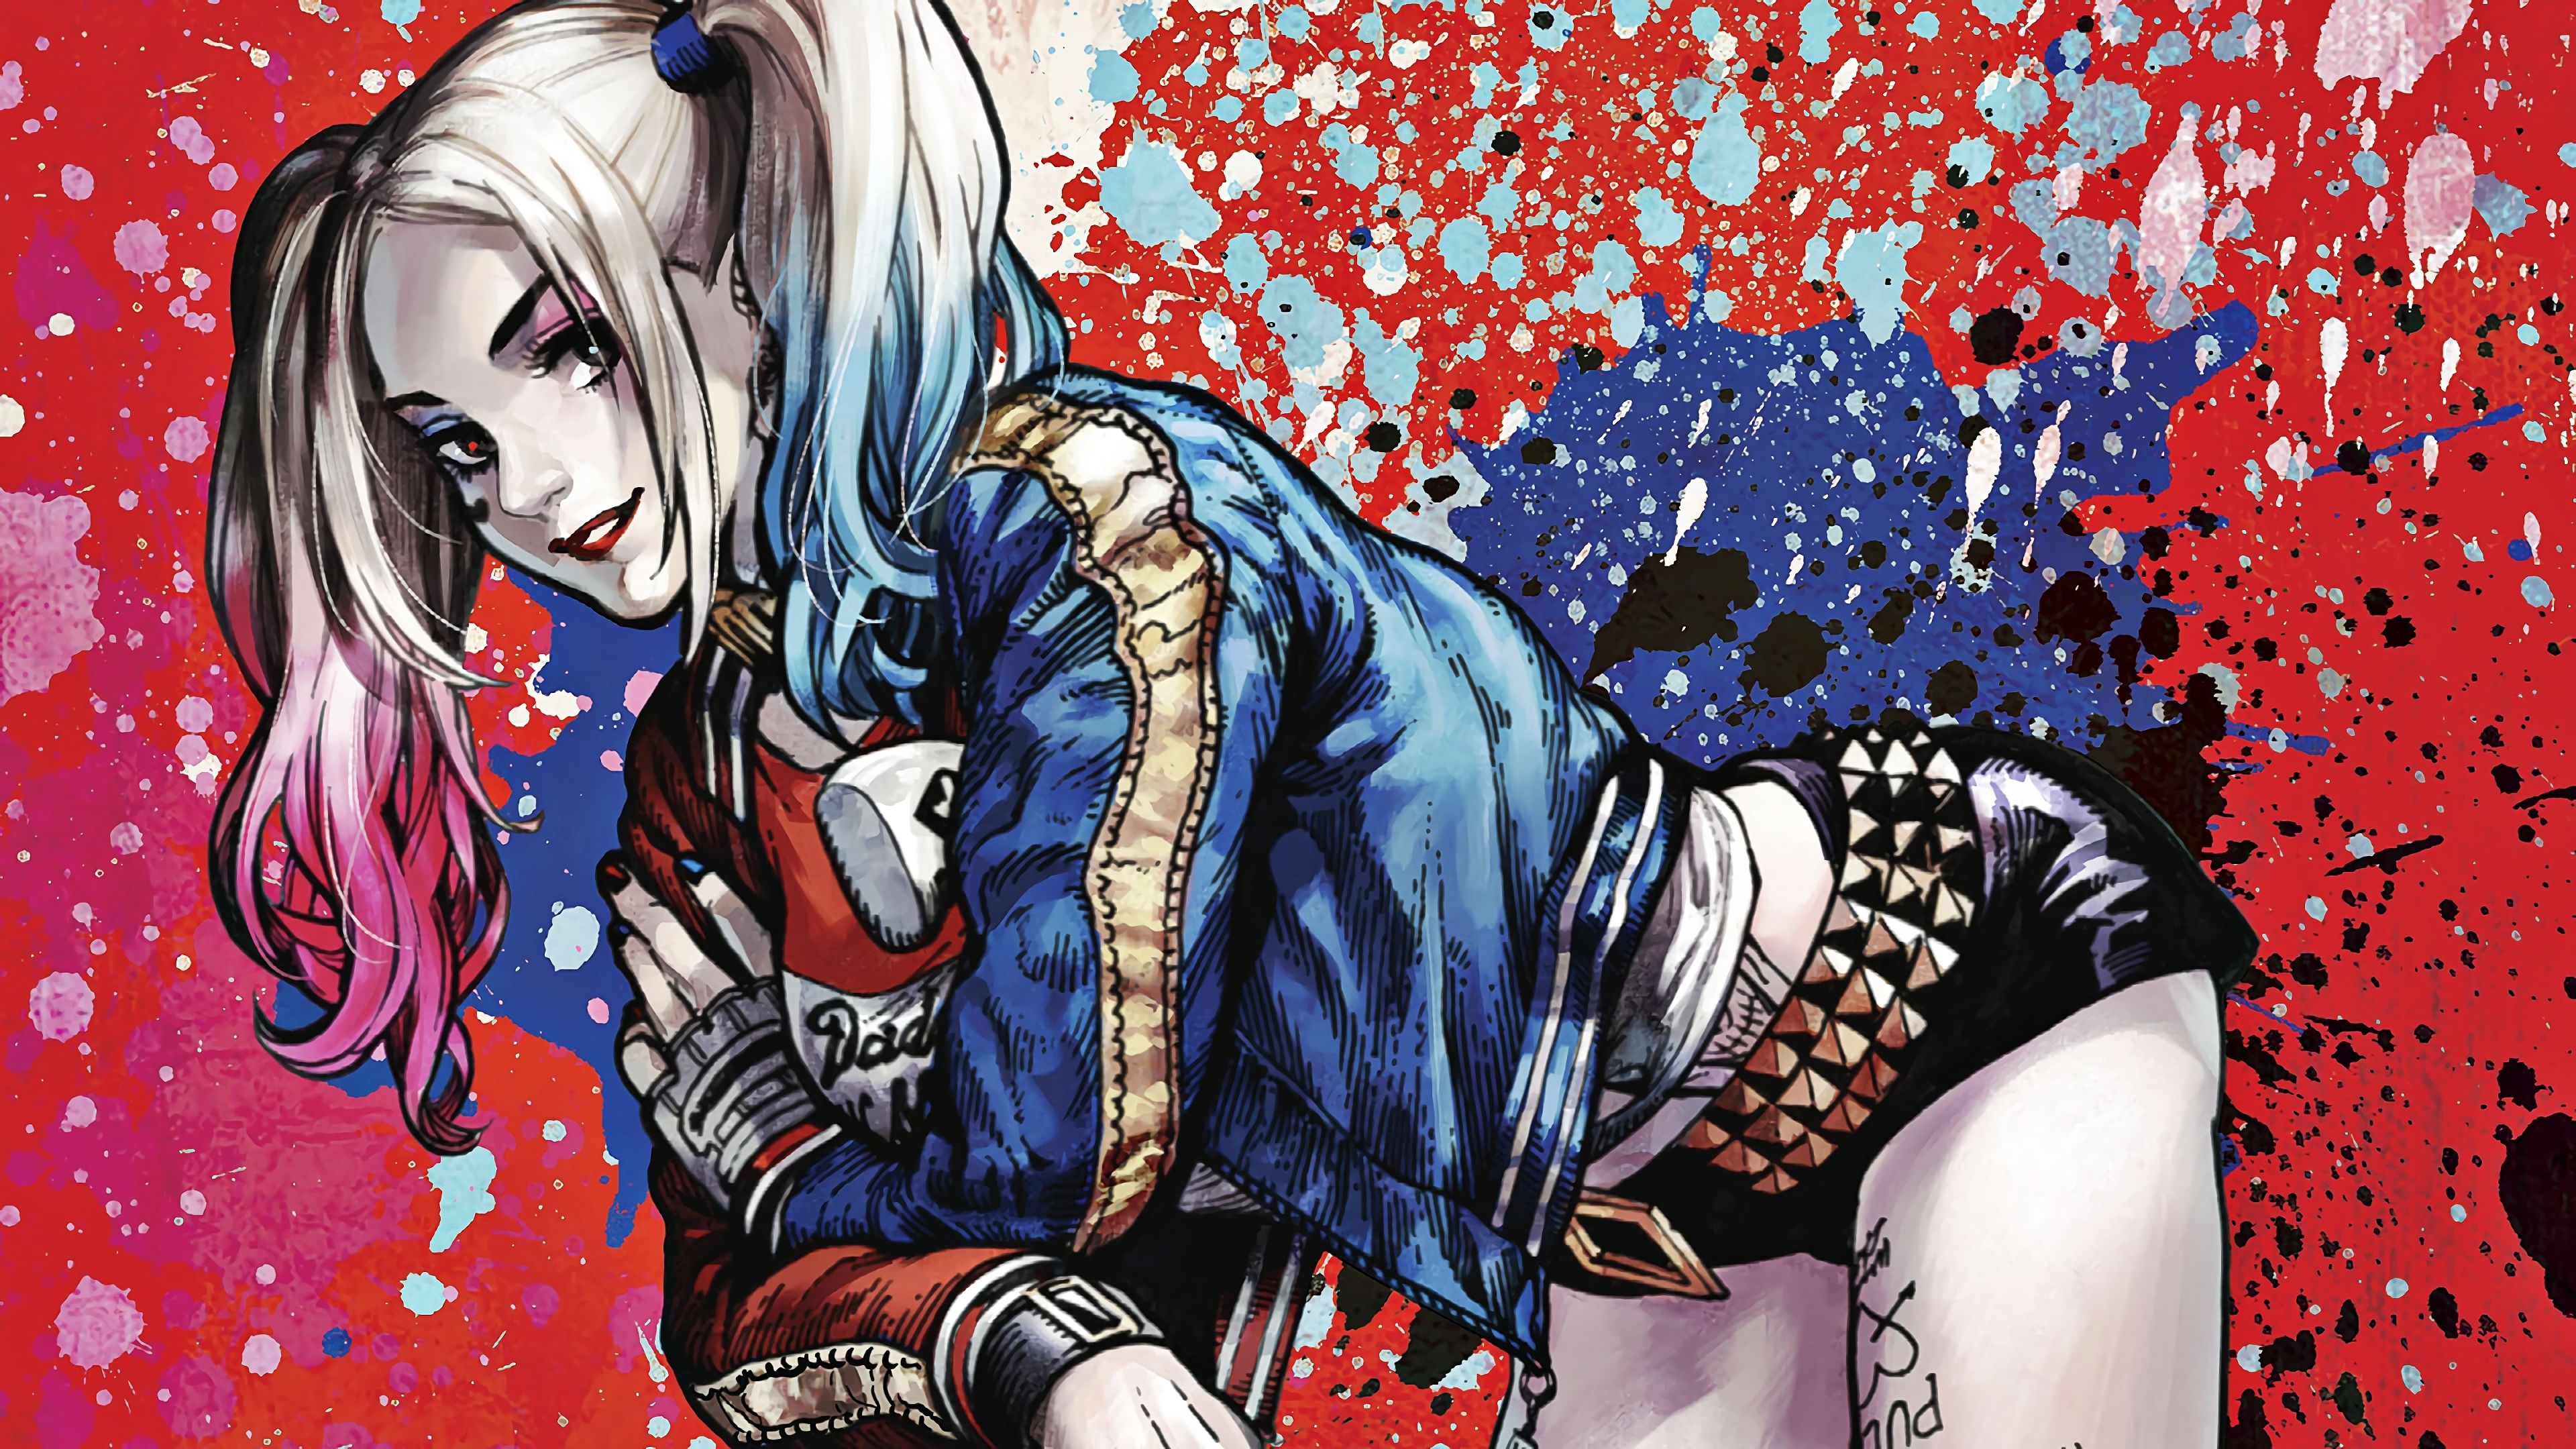 Best Anime Art Harley Quinn Dc Comics A4741 Free Wallpaper Download